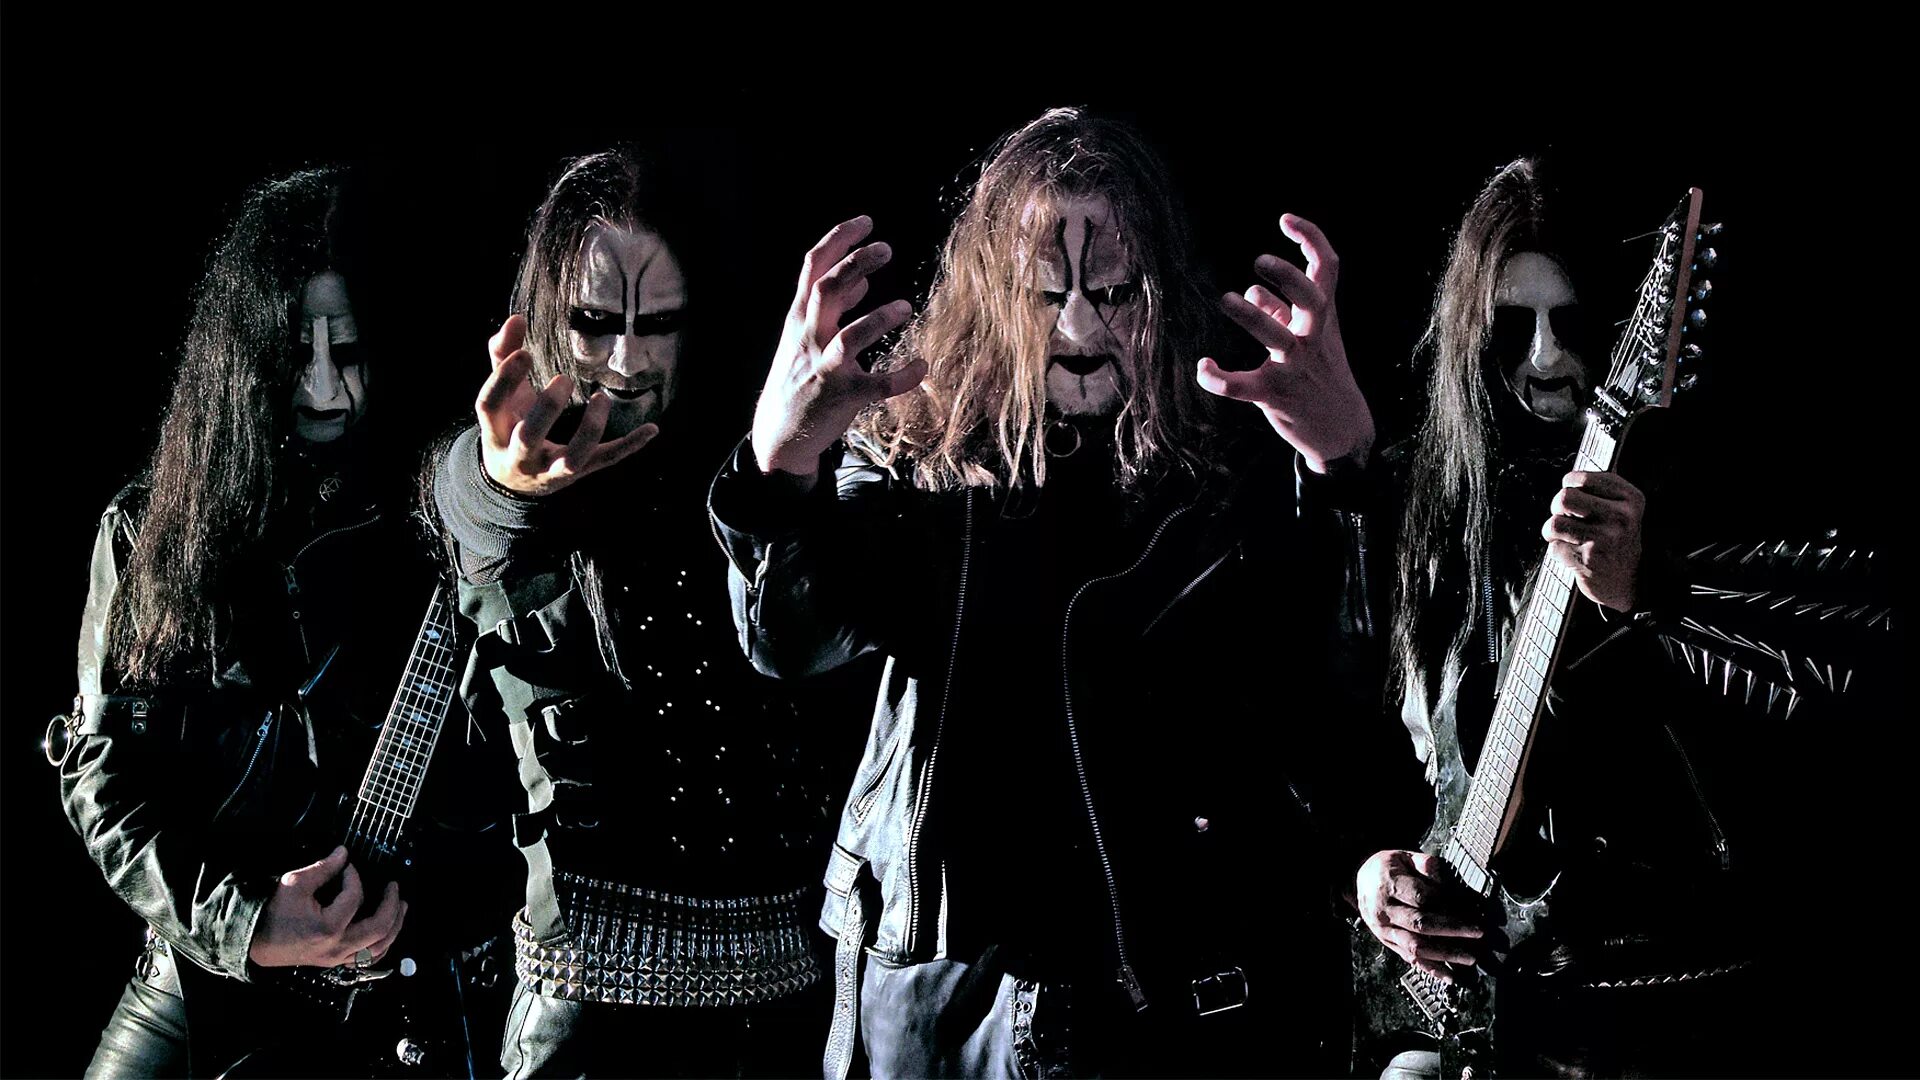 Металл музыка группы. Группа Dark Funeral. Металл группа дарк фьюнерал. Dark Funeral фото группы.